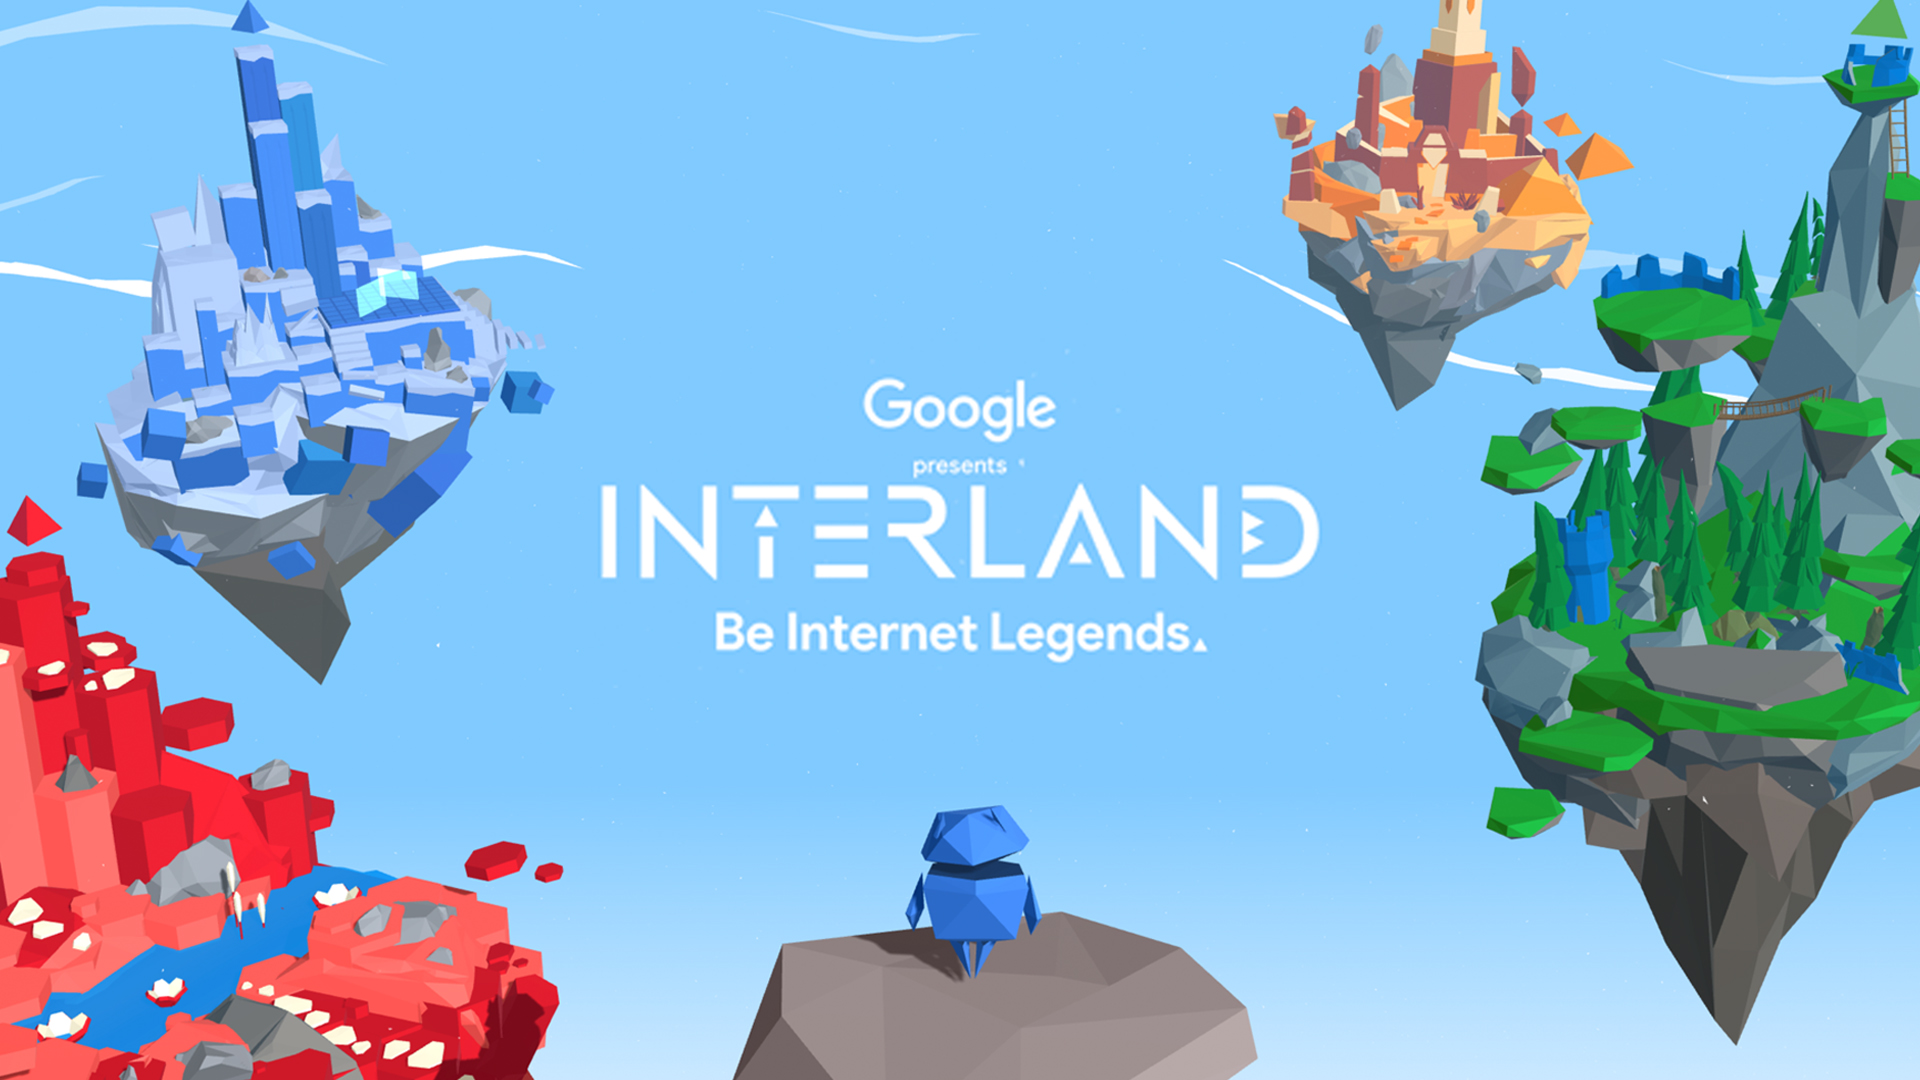 Be Internet Legends Interland